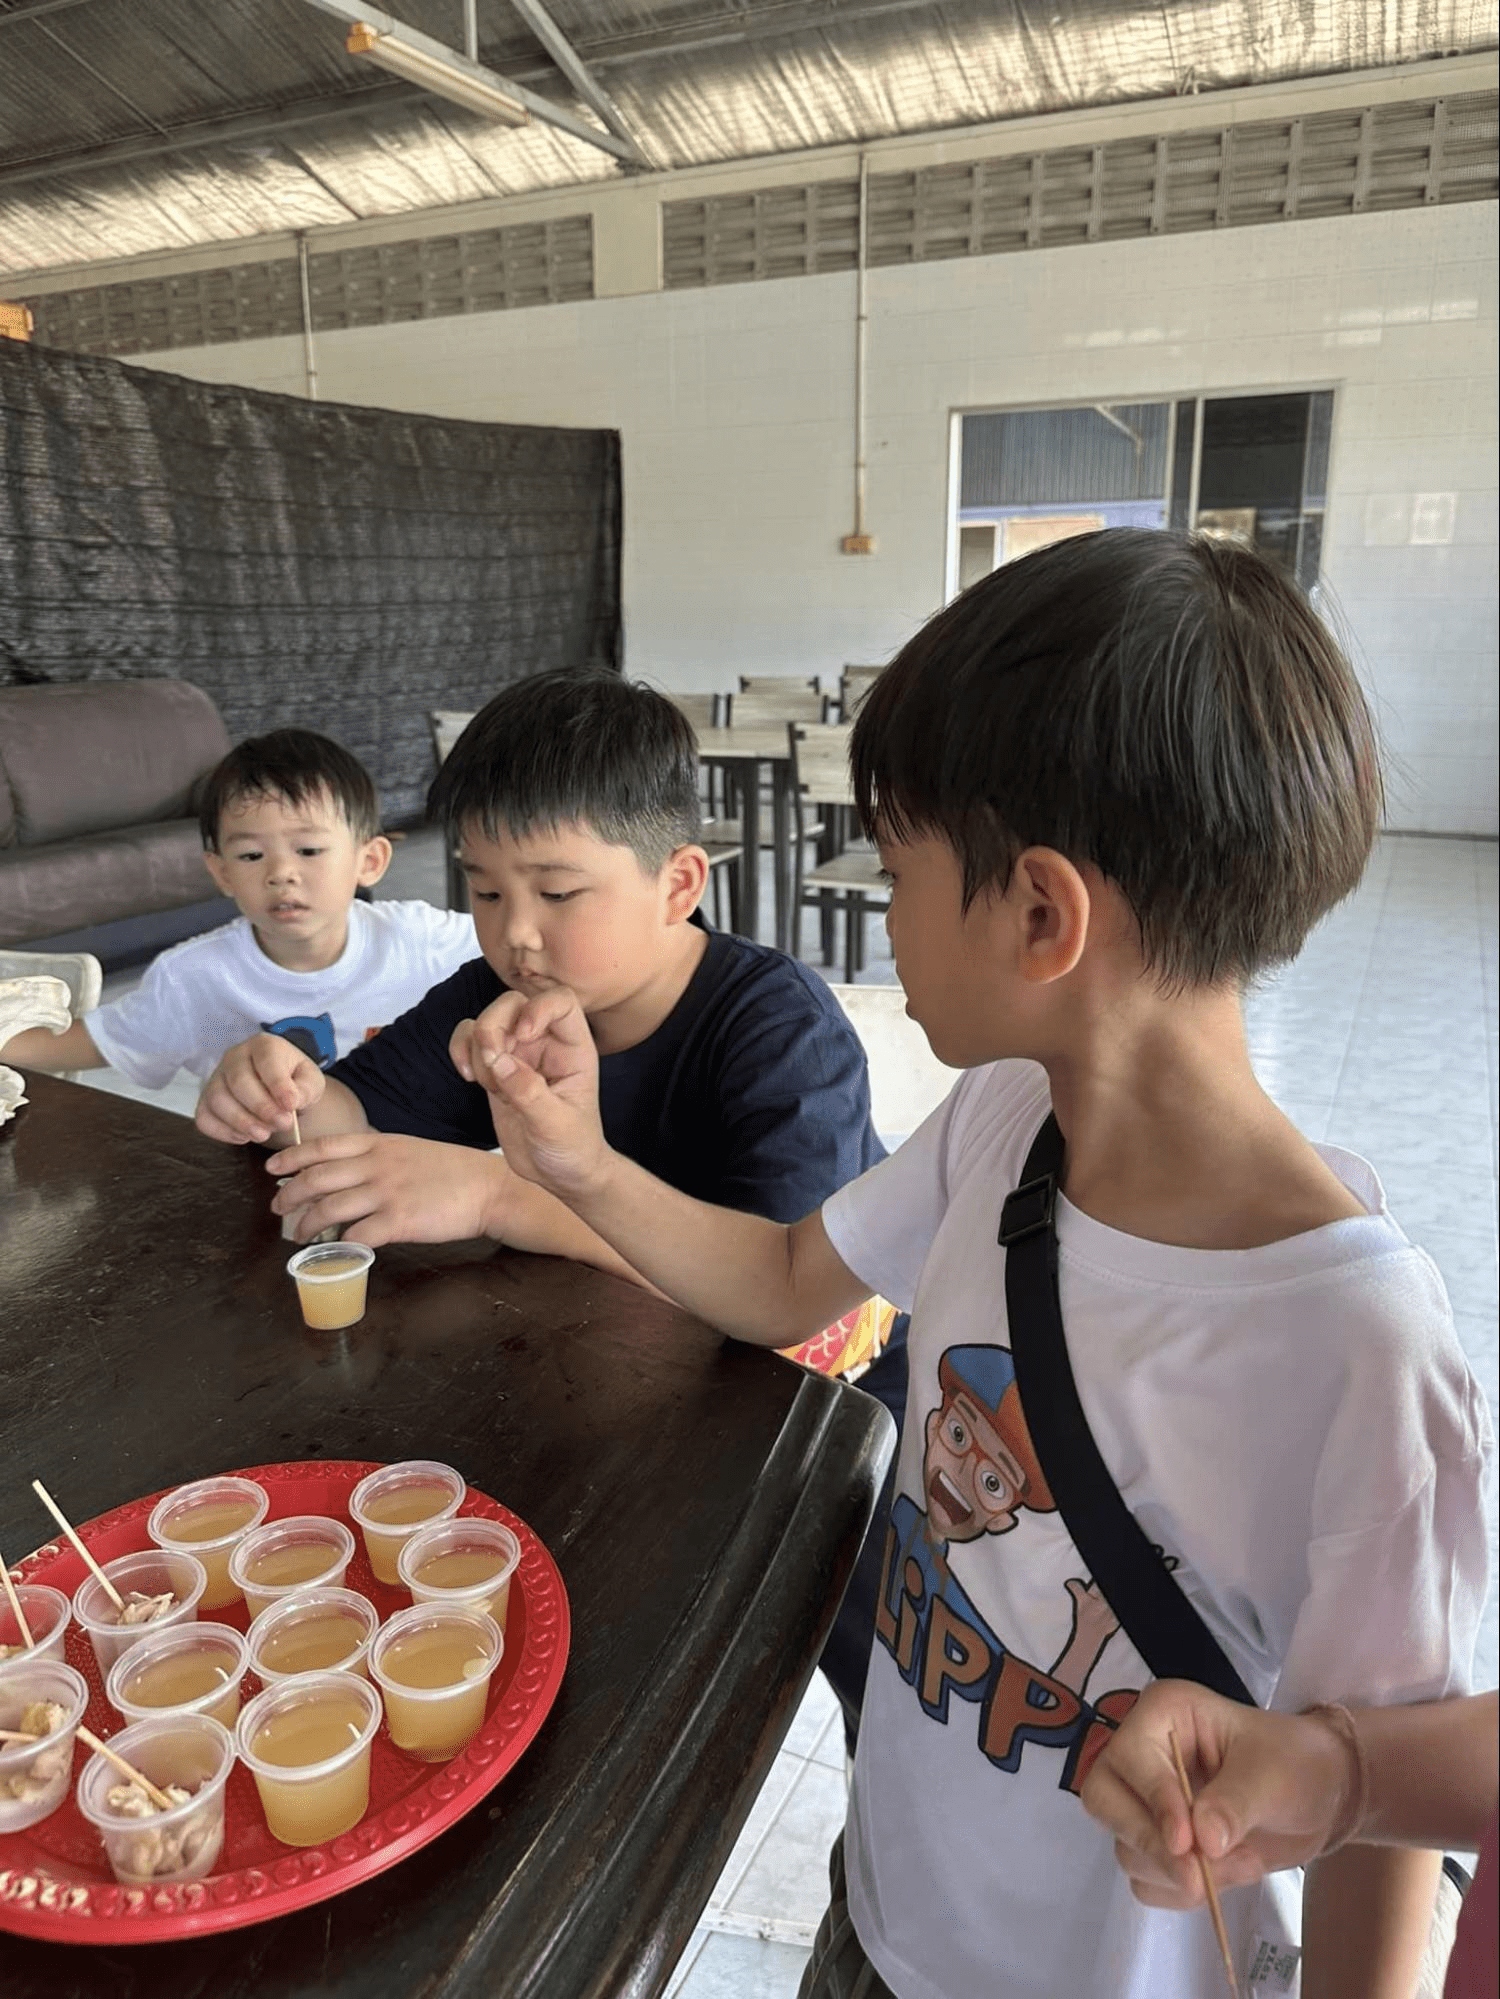 Long Kuan Hung Crocodile Farm - Kids trying the crocodile herbal soup sample 